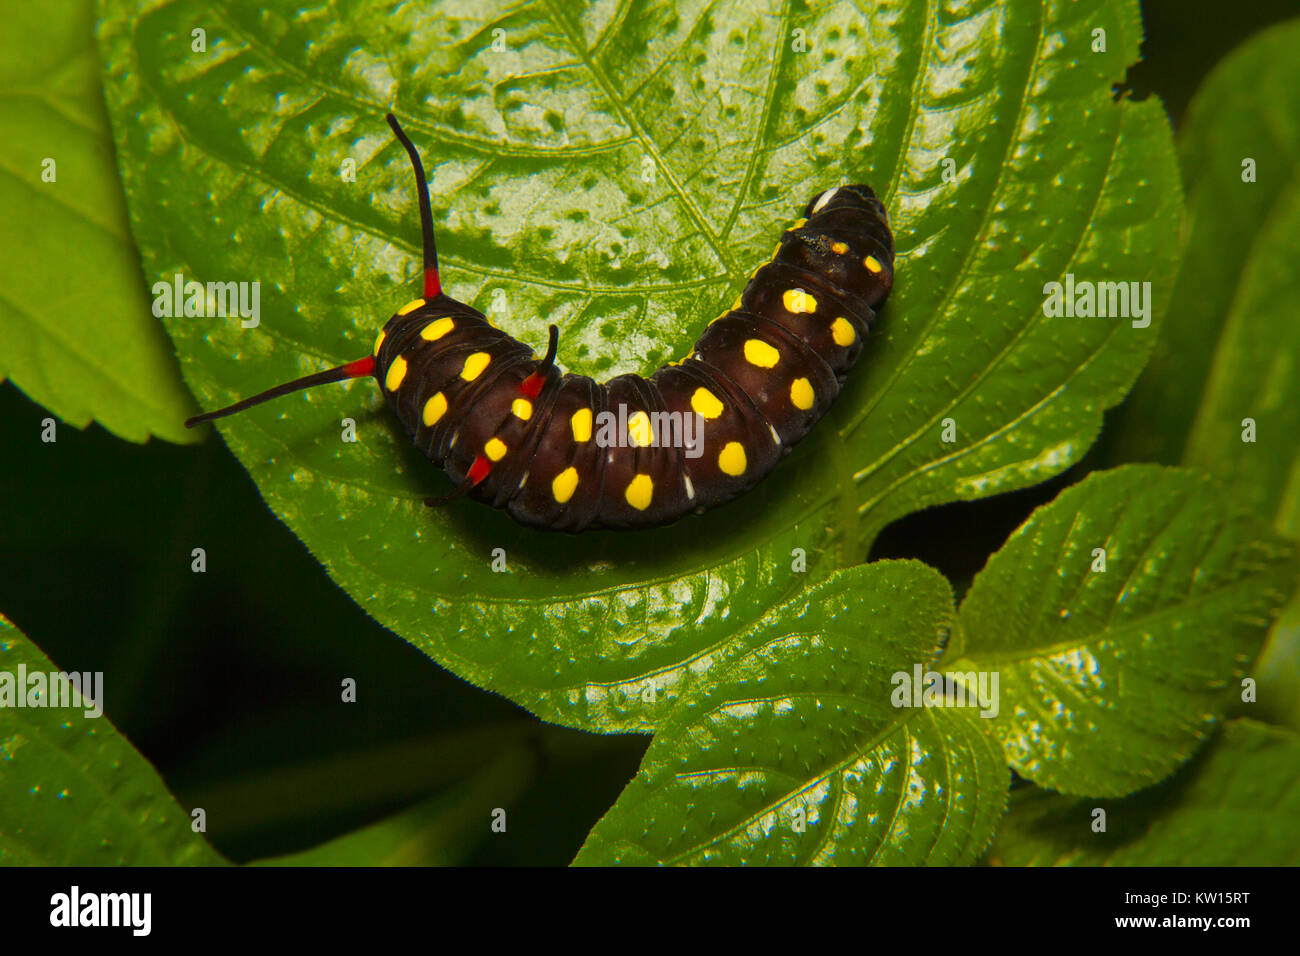 Schmetterling Raupe. Aarey Milk Colony, Mumbai, Maharashtra, Indien. Stockfoto